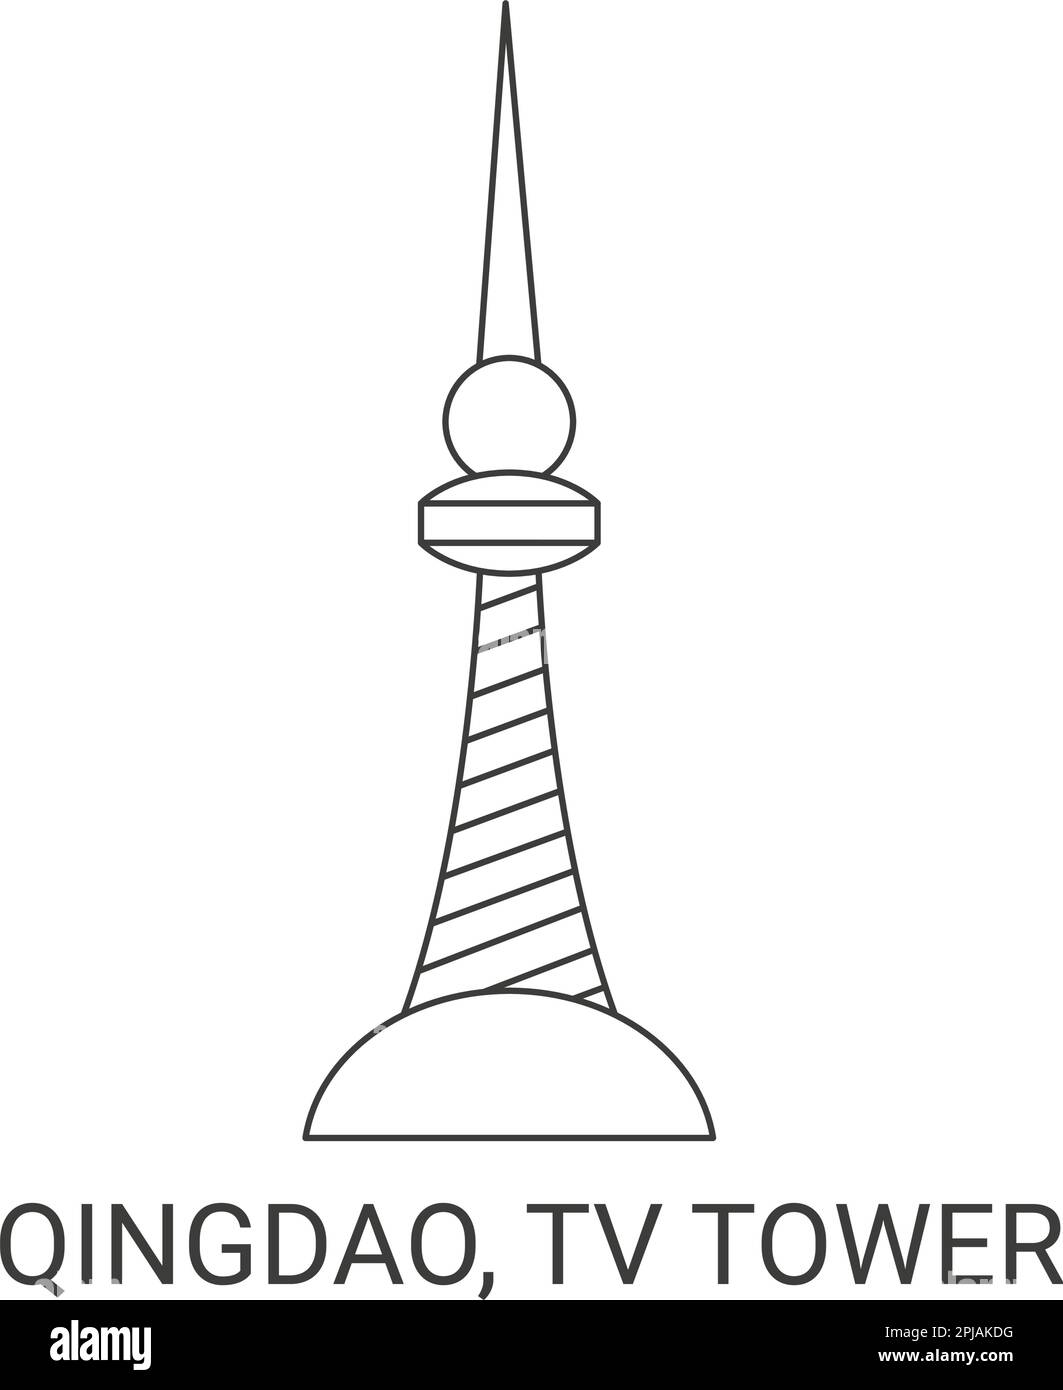 China, Qingdao, Tv Tower, travel landmark vector illustration Stock Vector